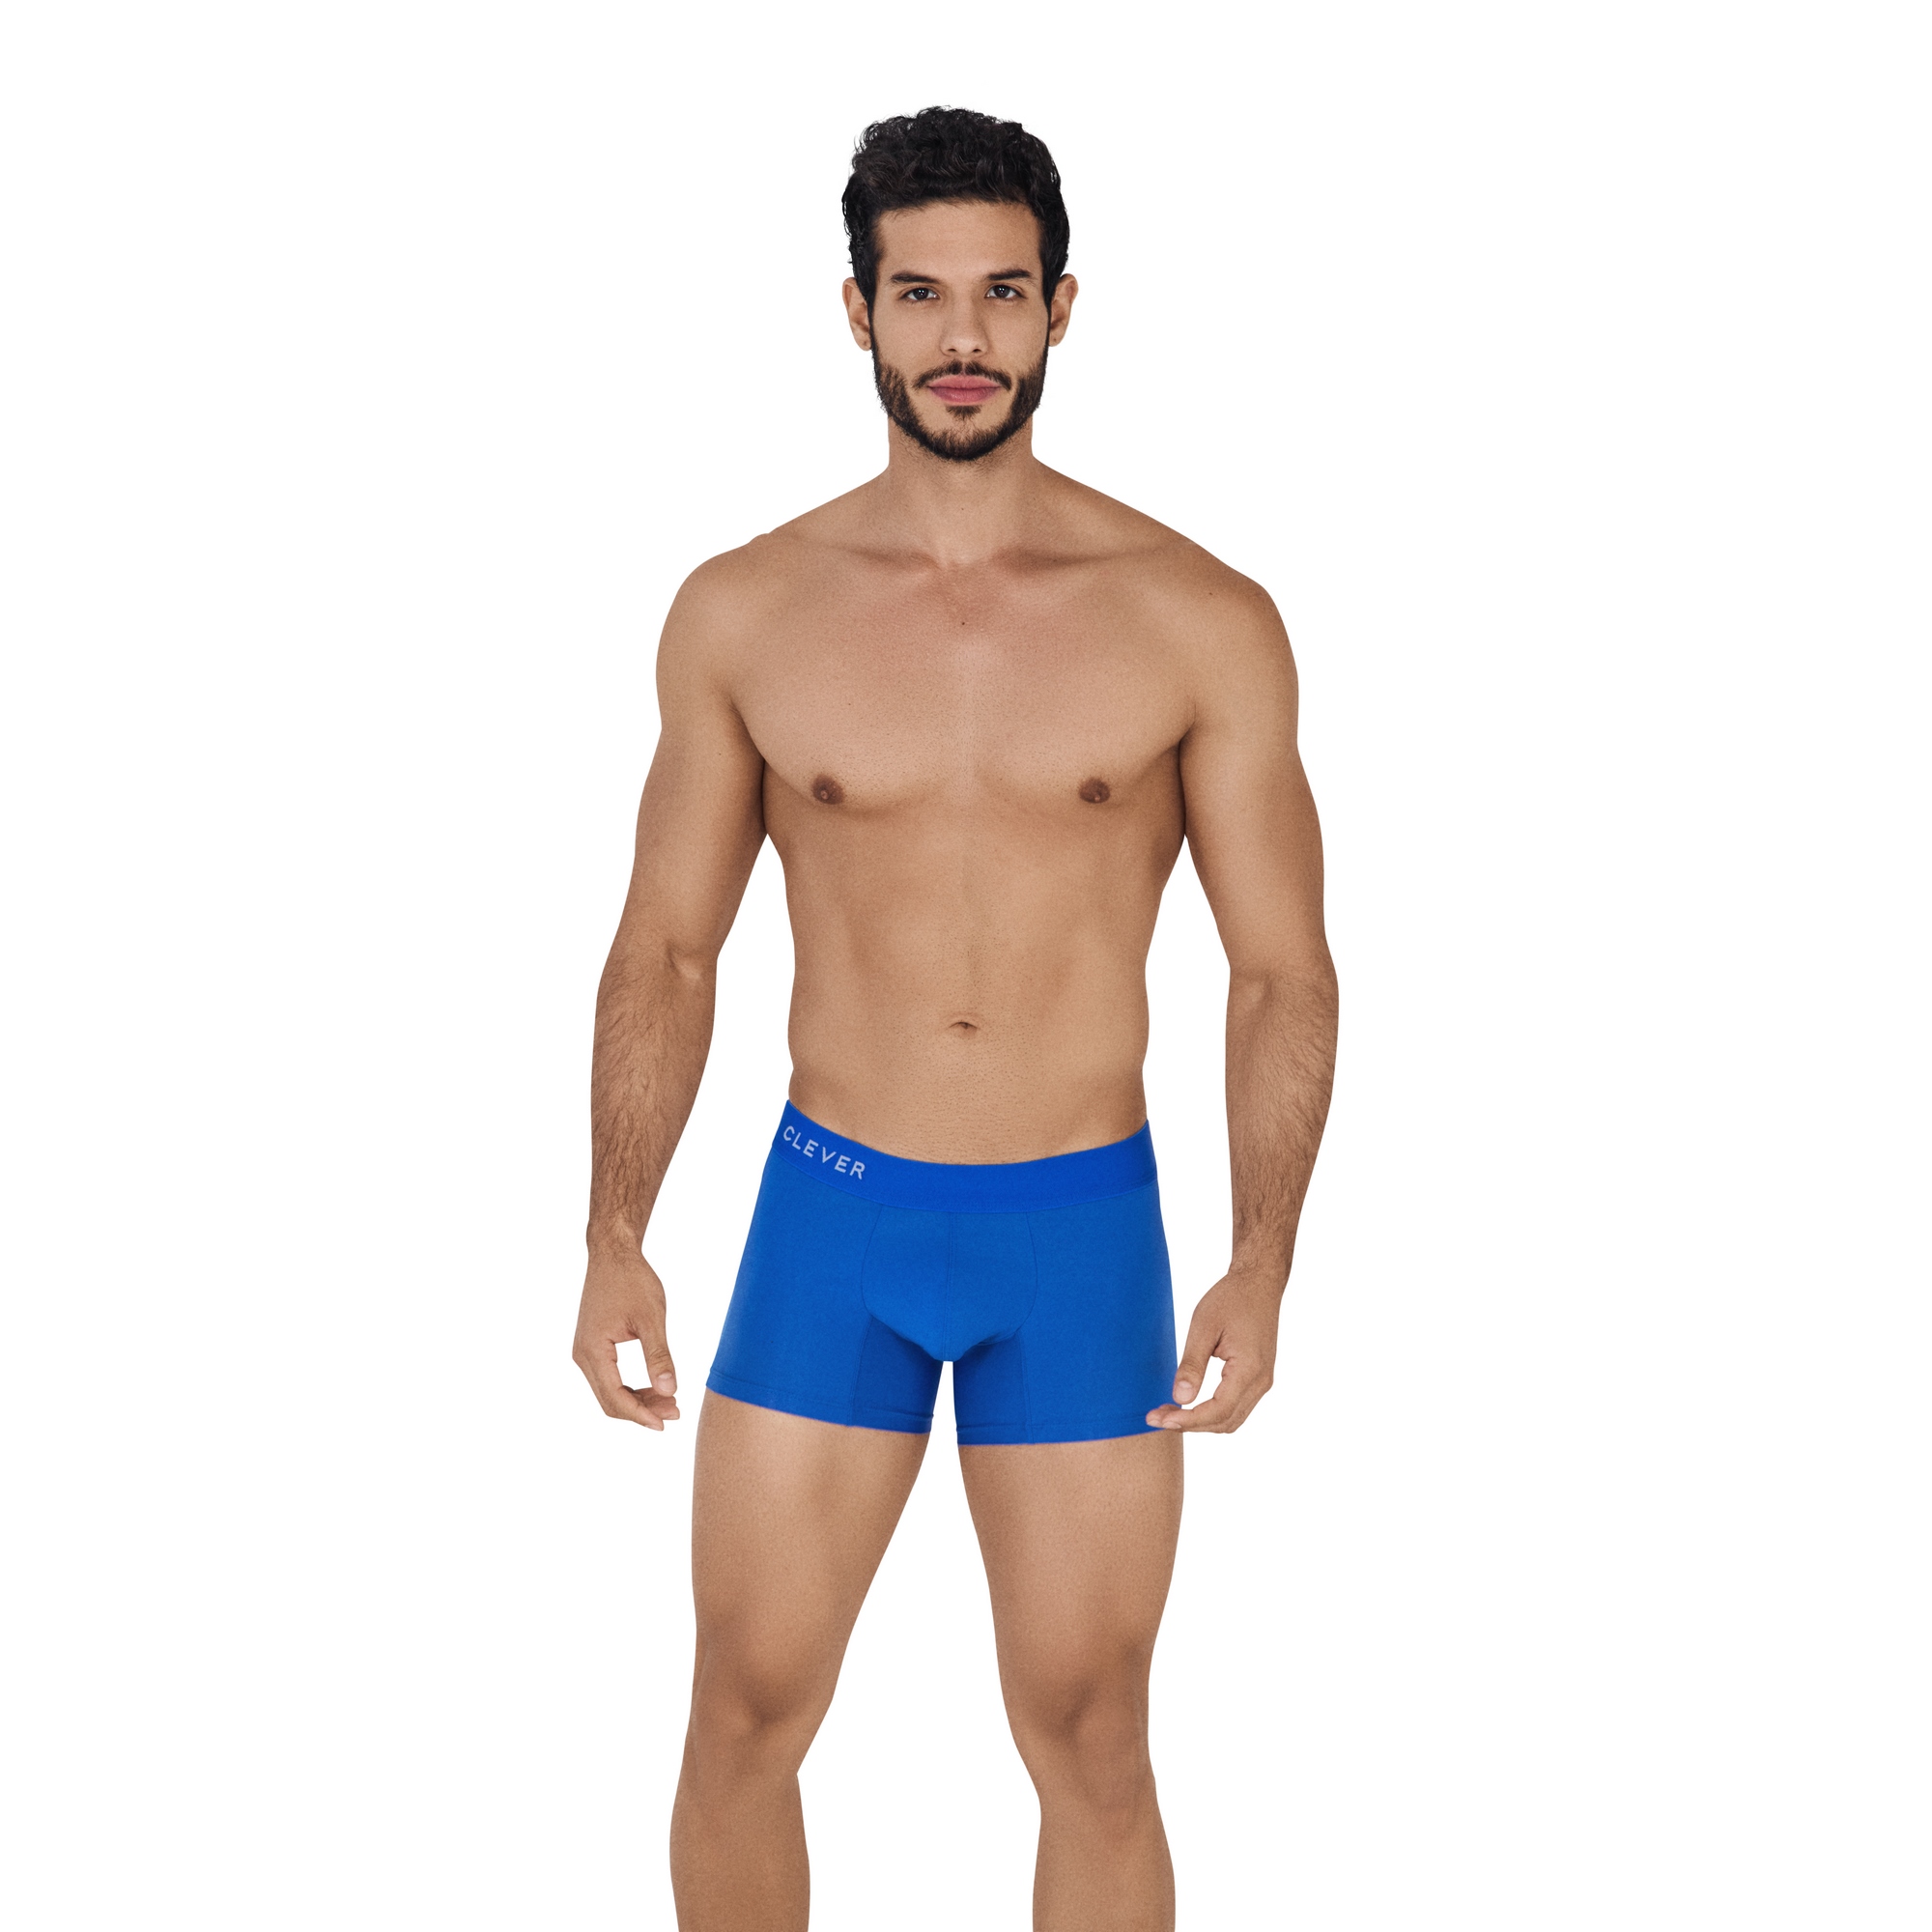 Трусы мужские Clever Masculine Underwear 0532 синие L